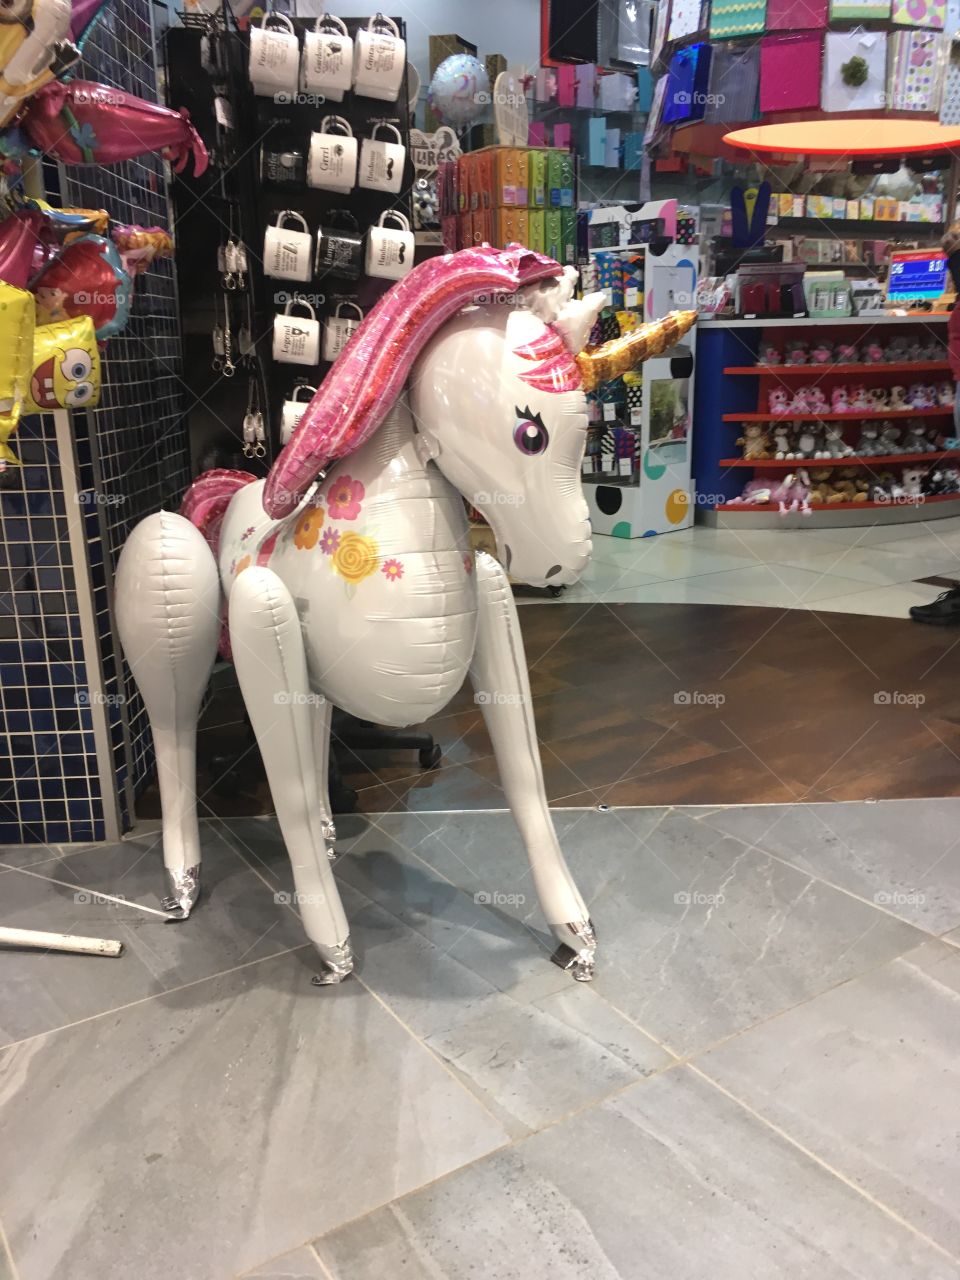 Unicorn ballon at shop entrance